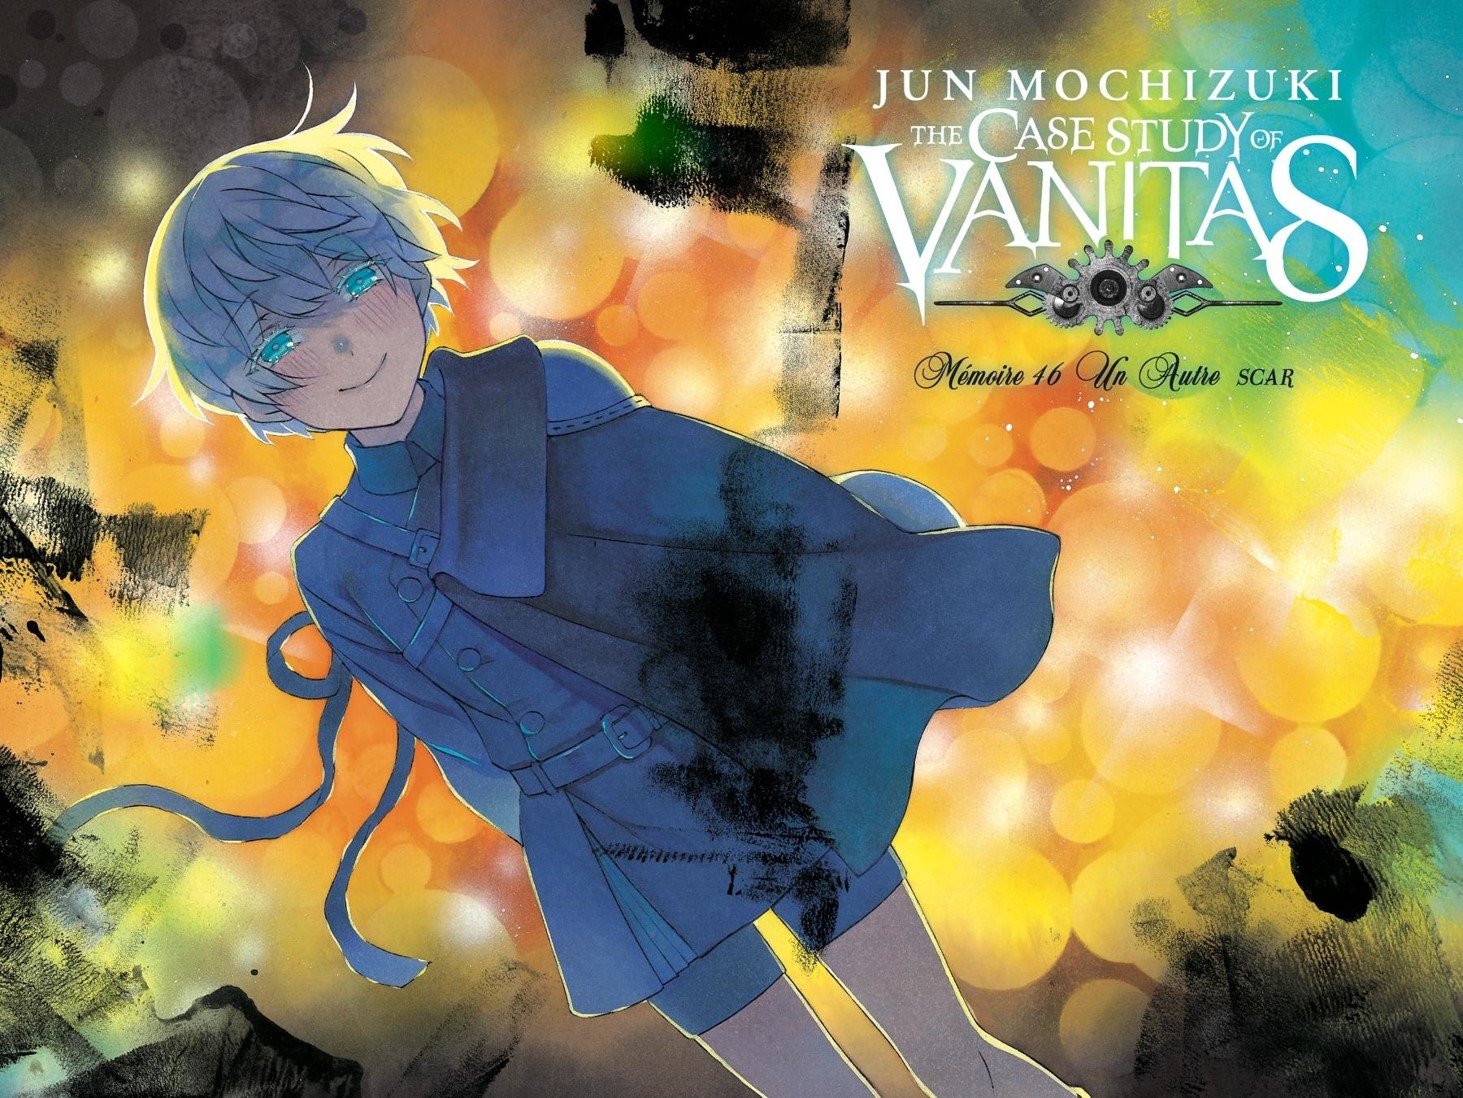 The Case Study of Vanitas 10, Jun Mochizuki Wiki